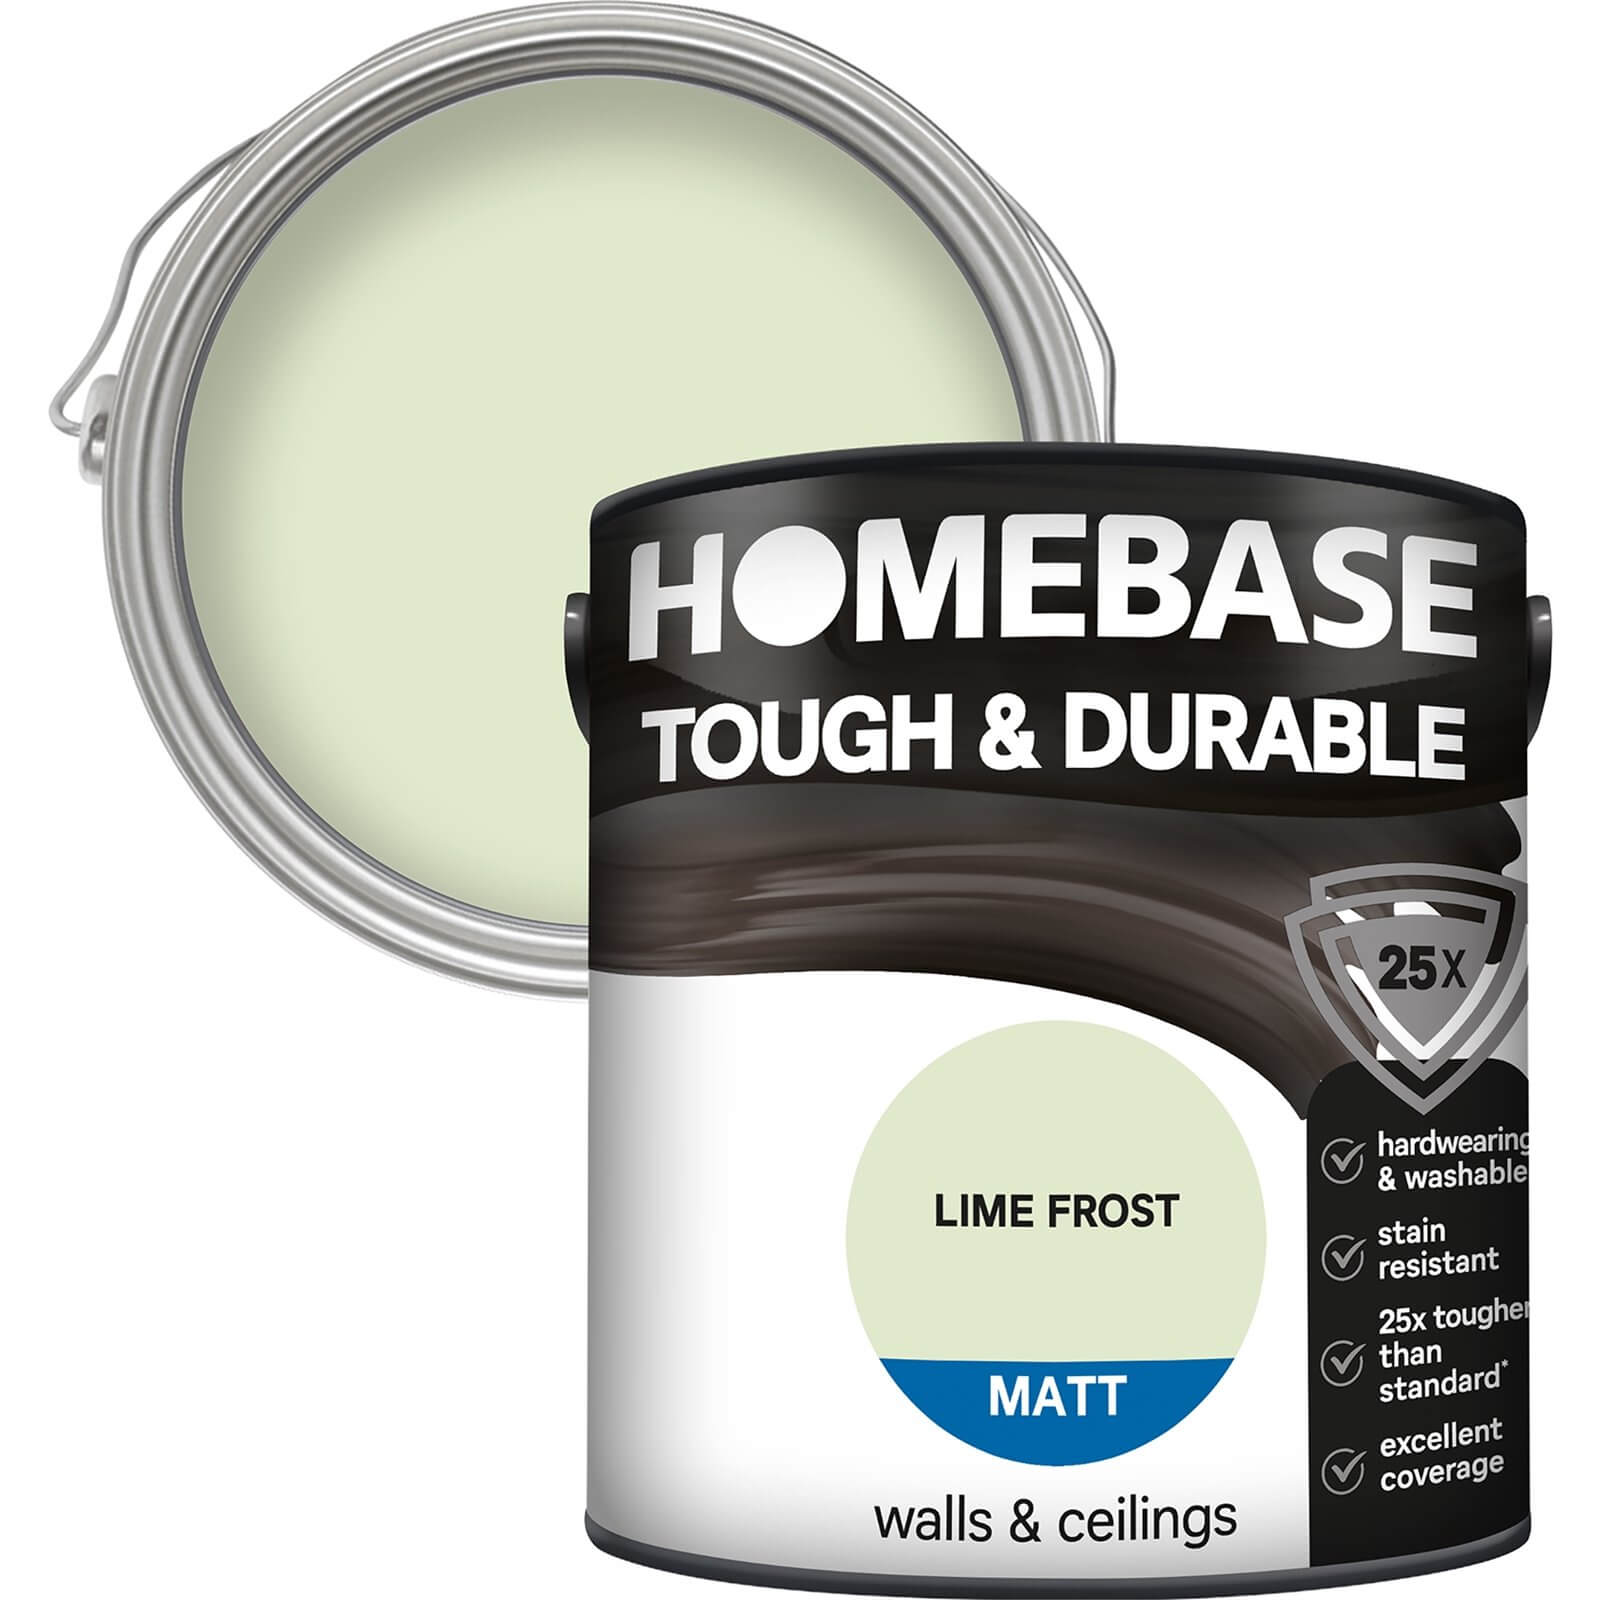 Homebase Tough & Durable Matt Paint Lime Frost - 2.5L